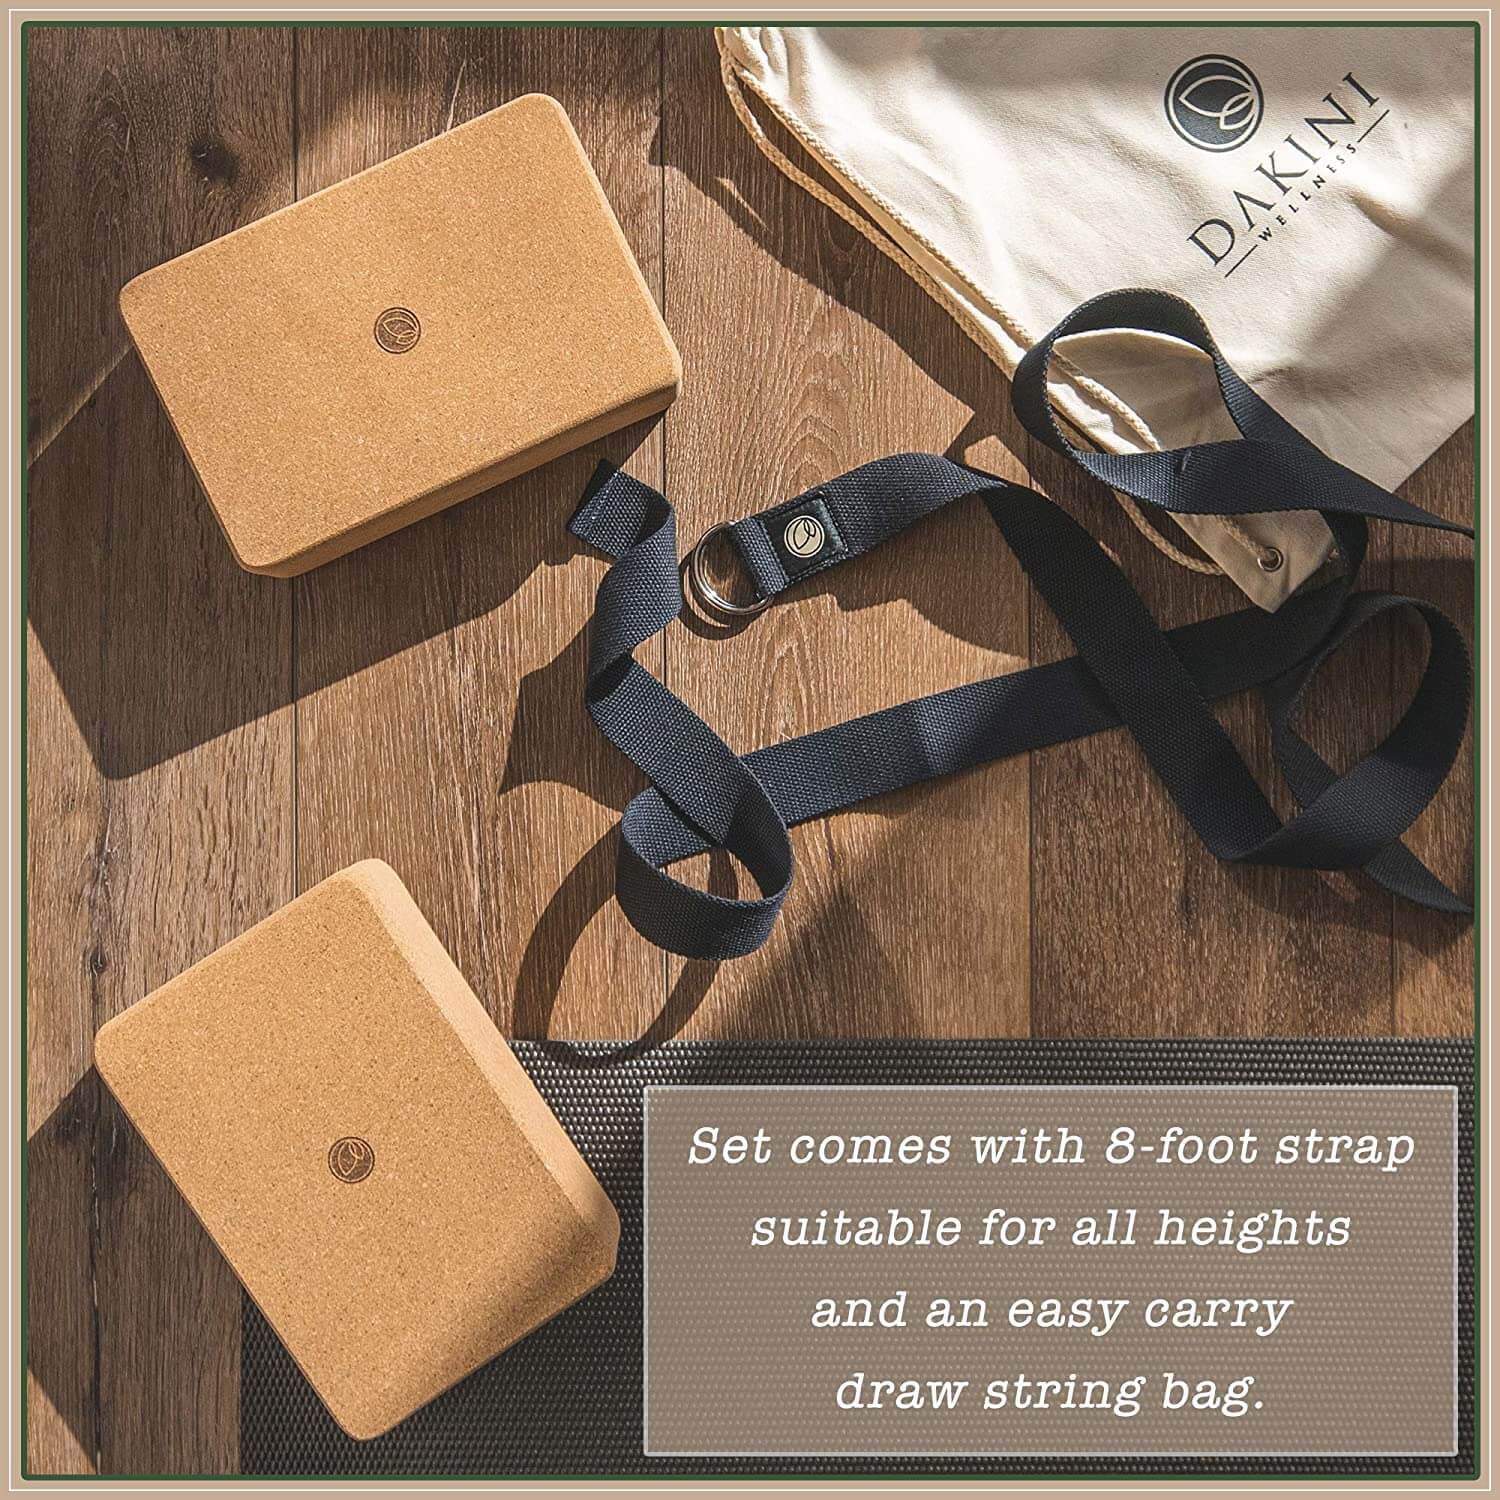 Risefit Sturdy Cork Yoga Blocks Pack of 2 and Yoga Straps Set